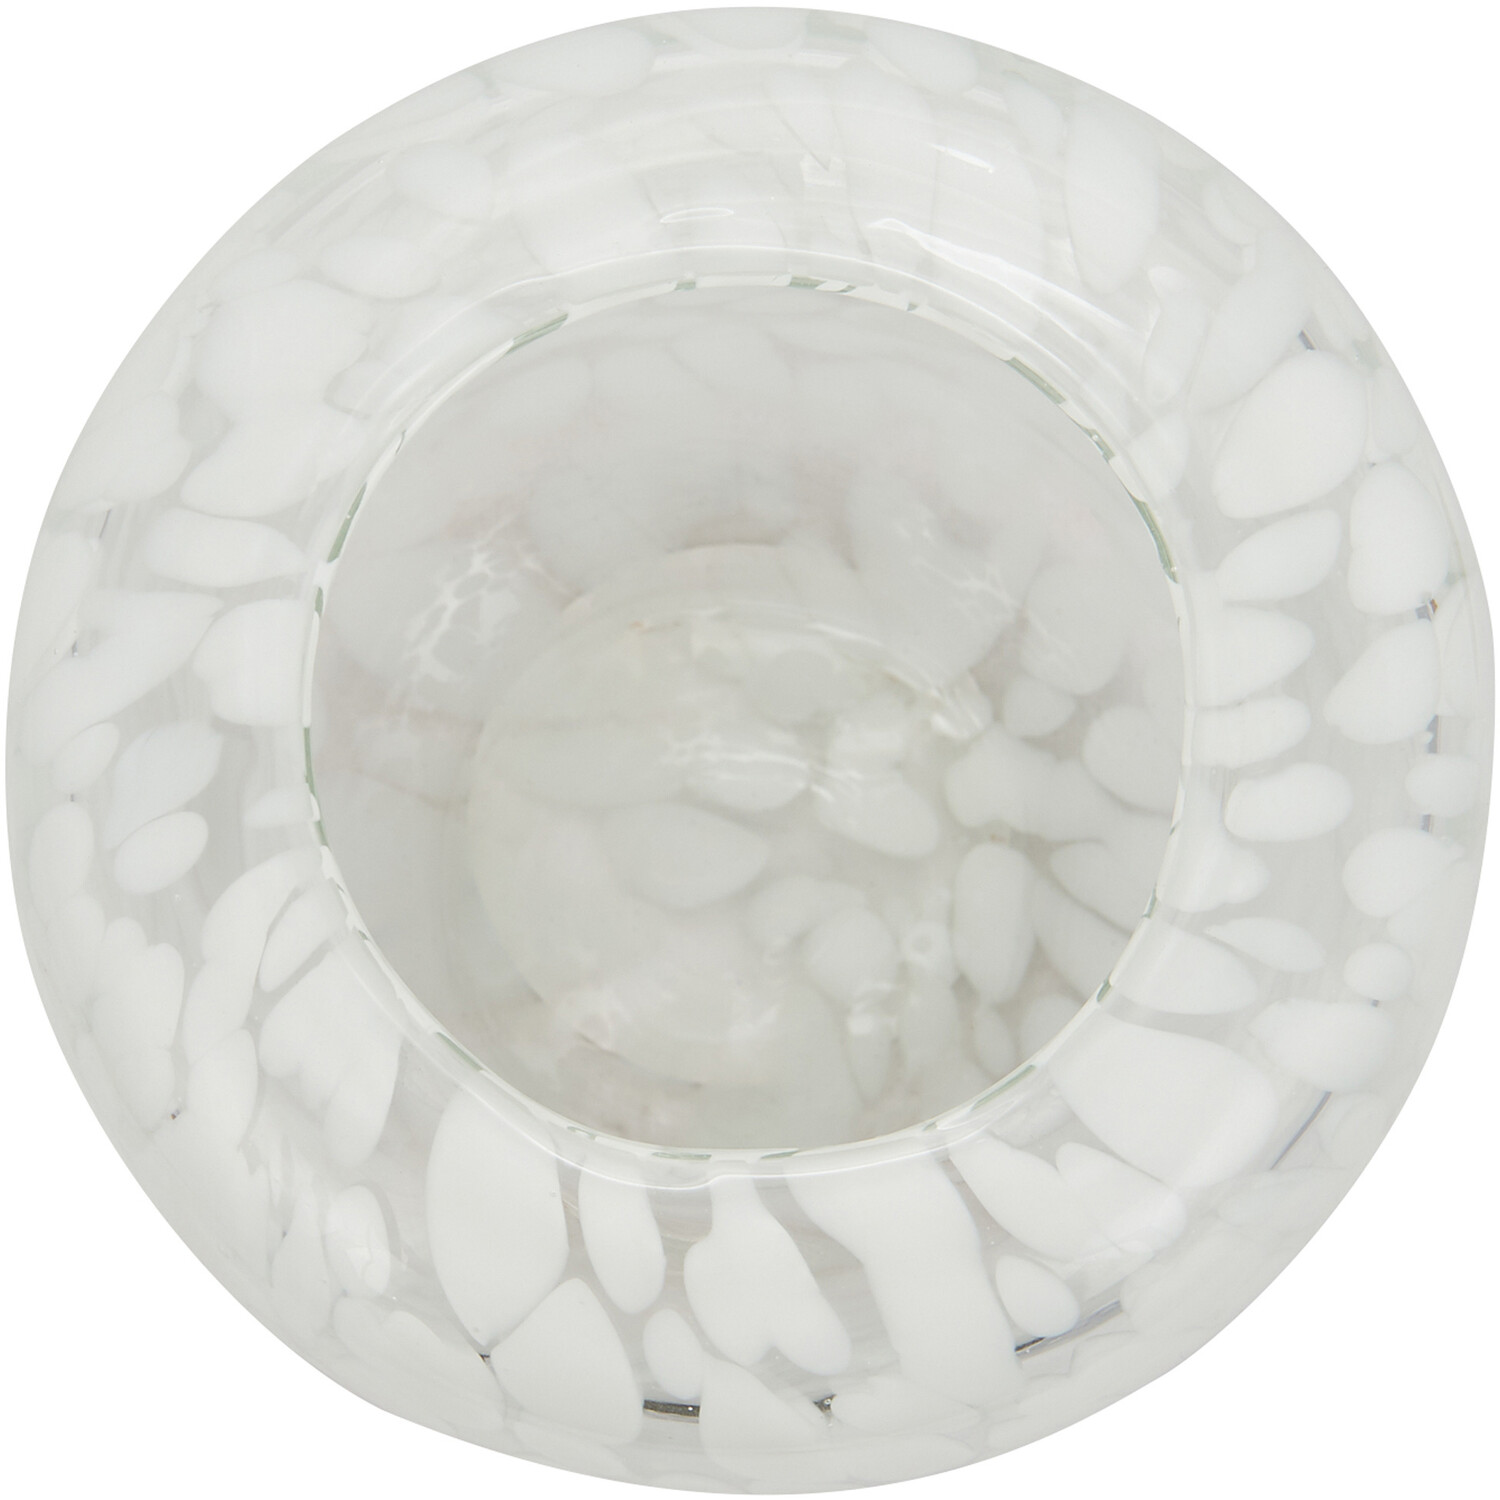 Confetti Vase - White Image 4